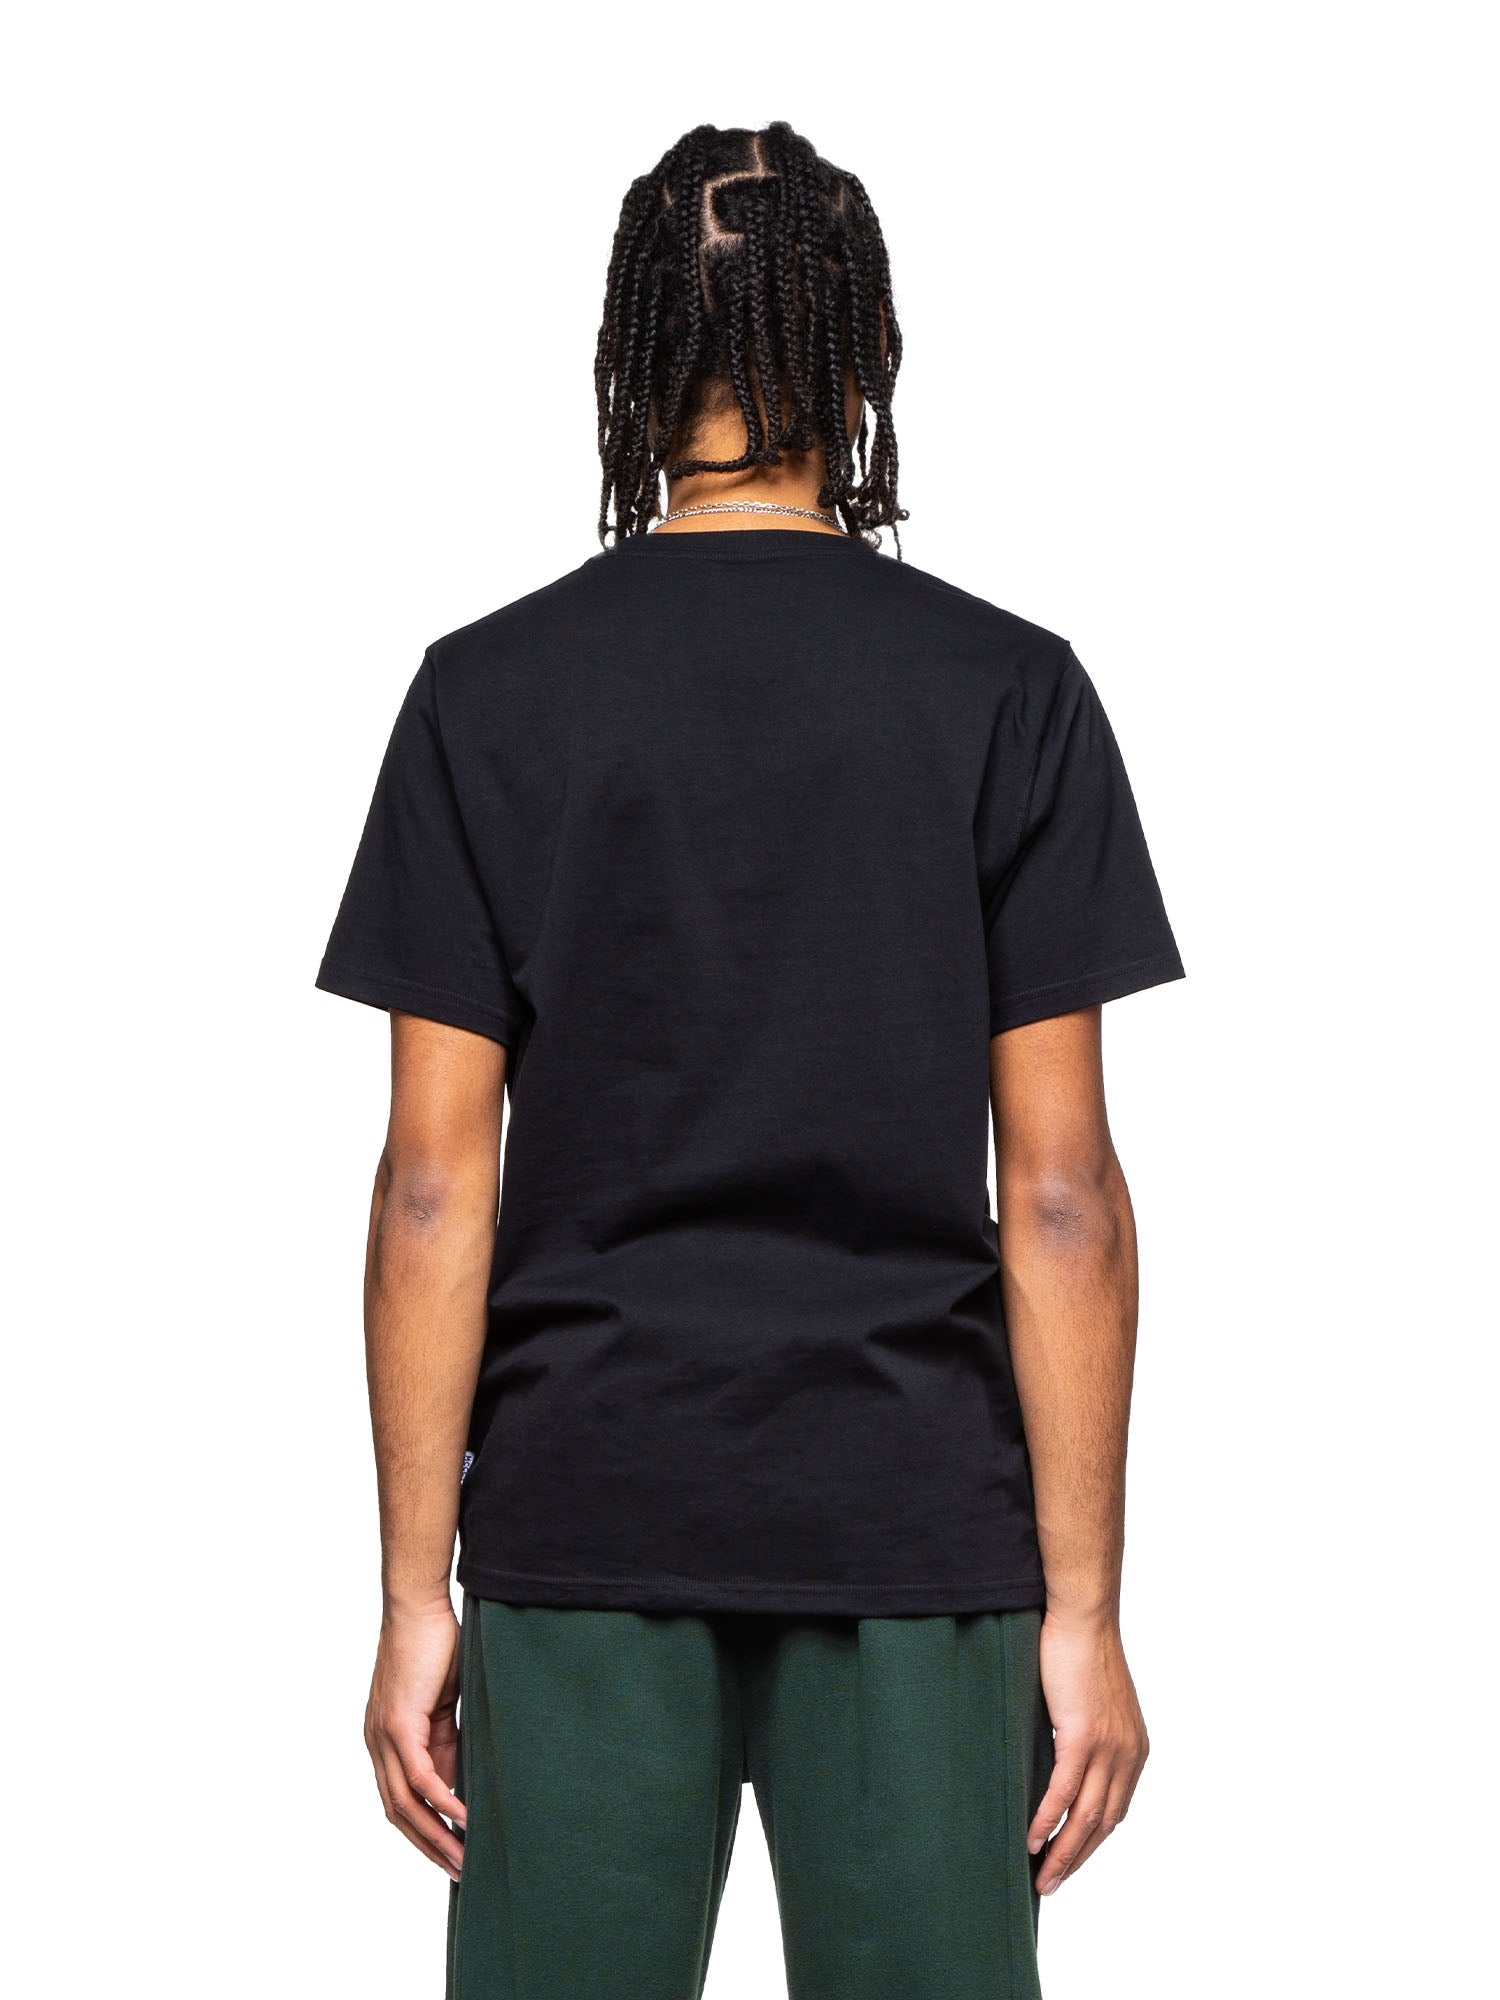 Blank T-Shirt - 1 Pack - Black